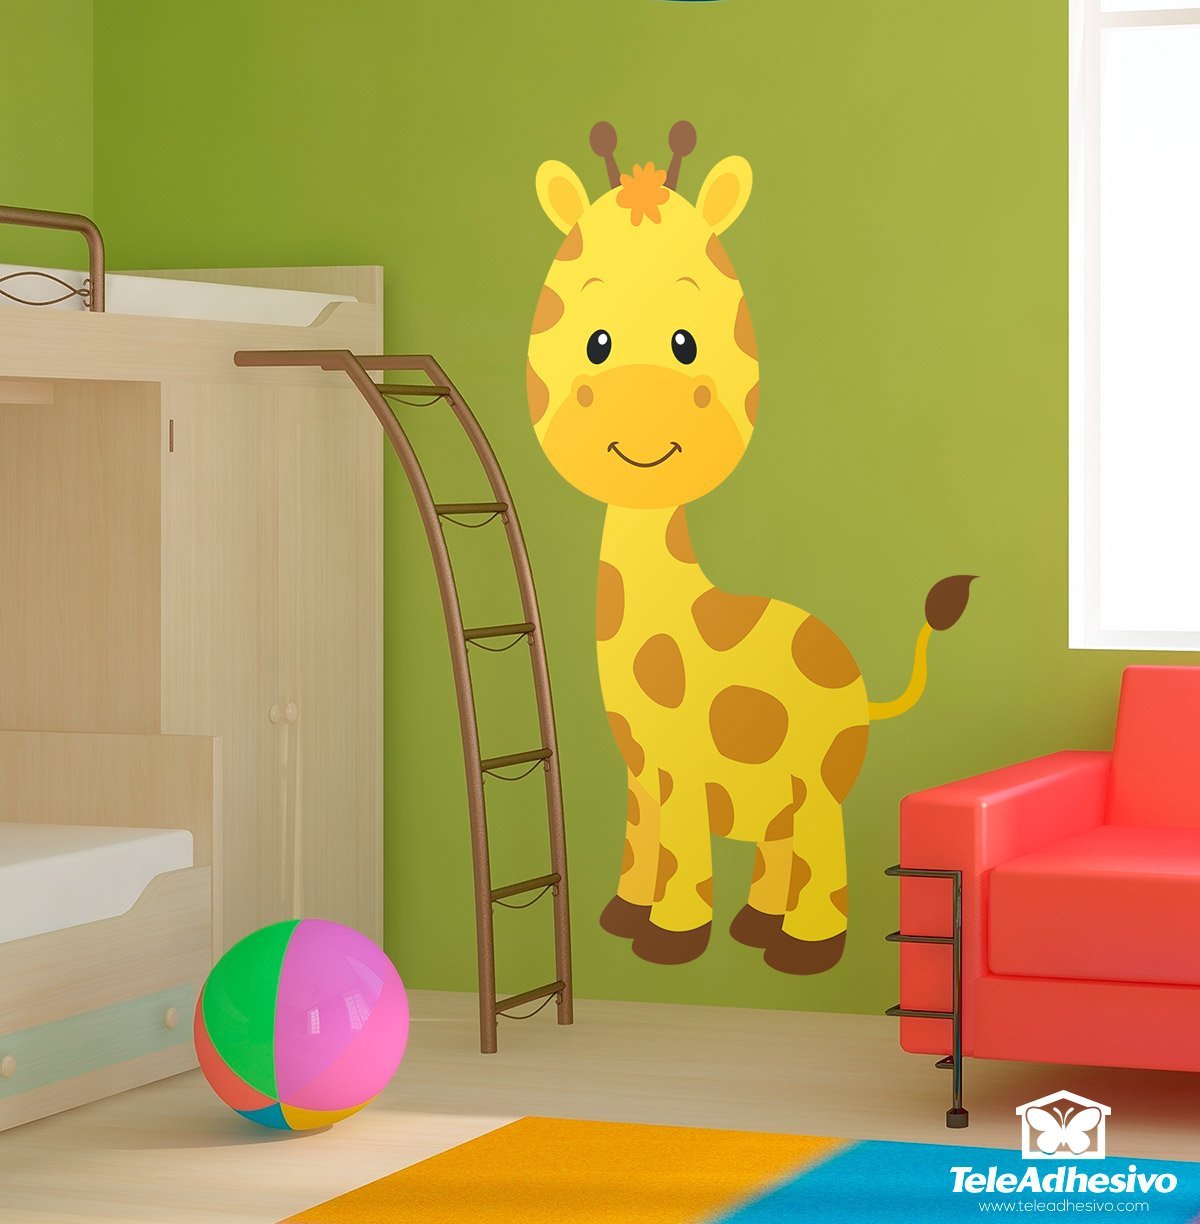 Stickers pour enfants: Girafe heureuse